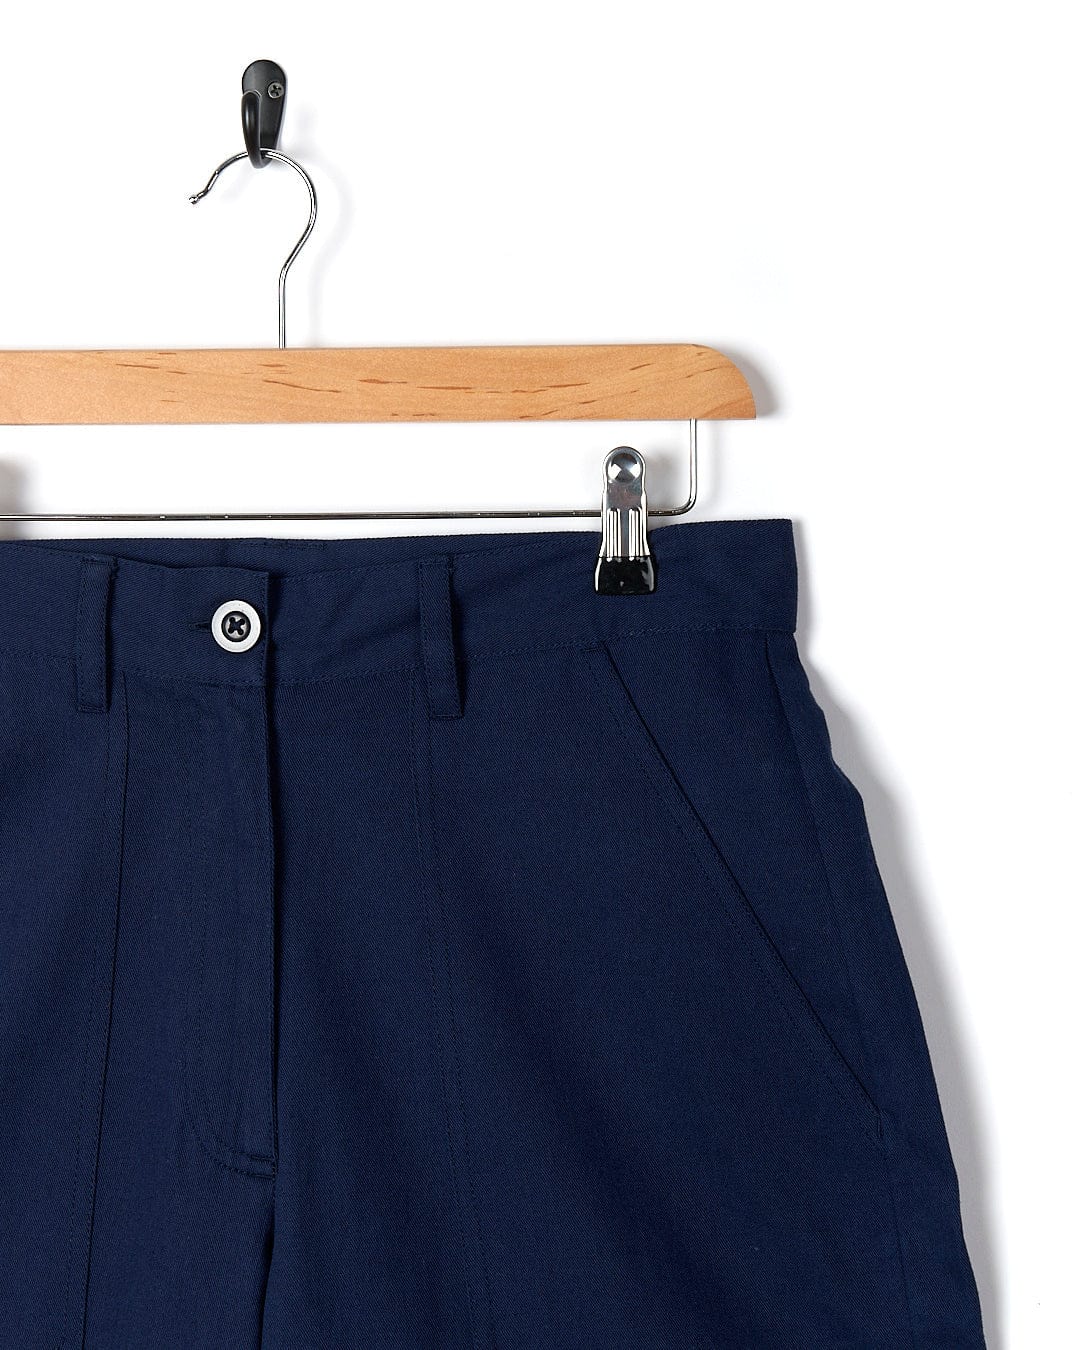 A pair of Hilda - Womens Canvas Trouser - Dark Blue shorts hanging on a hanger. Brand: Saltrock.